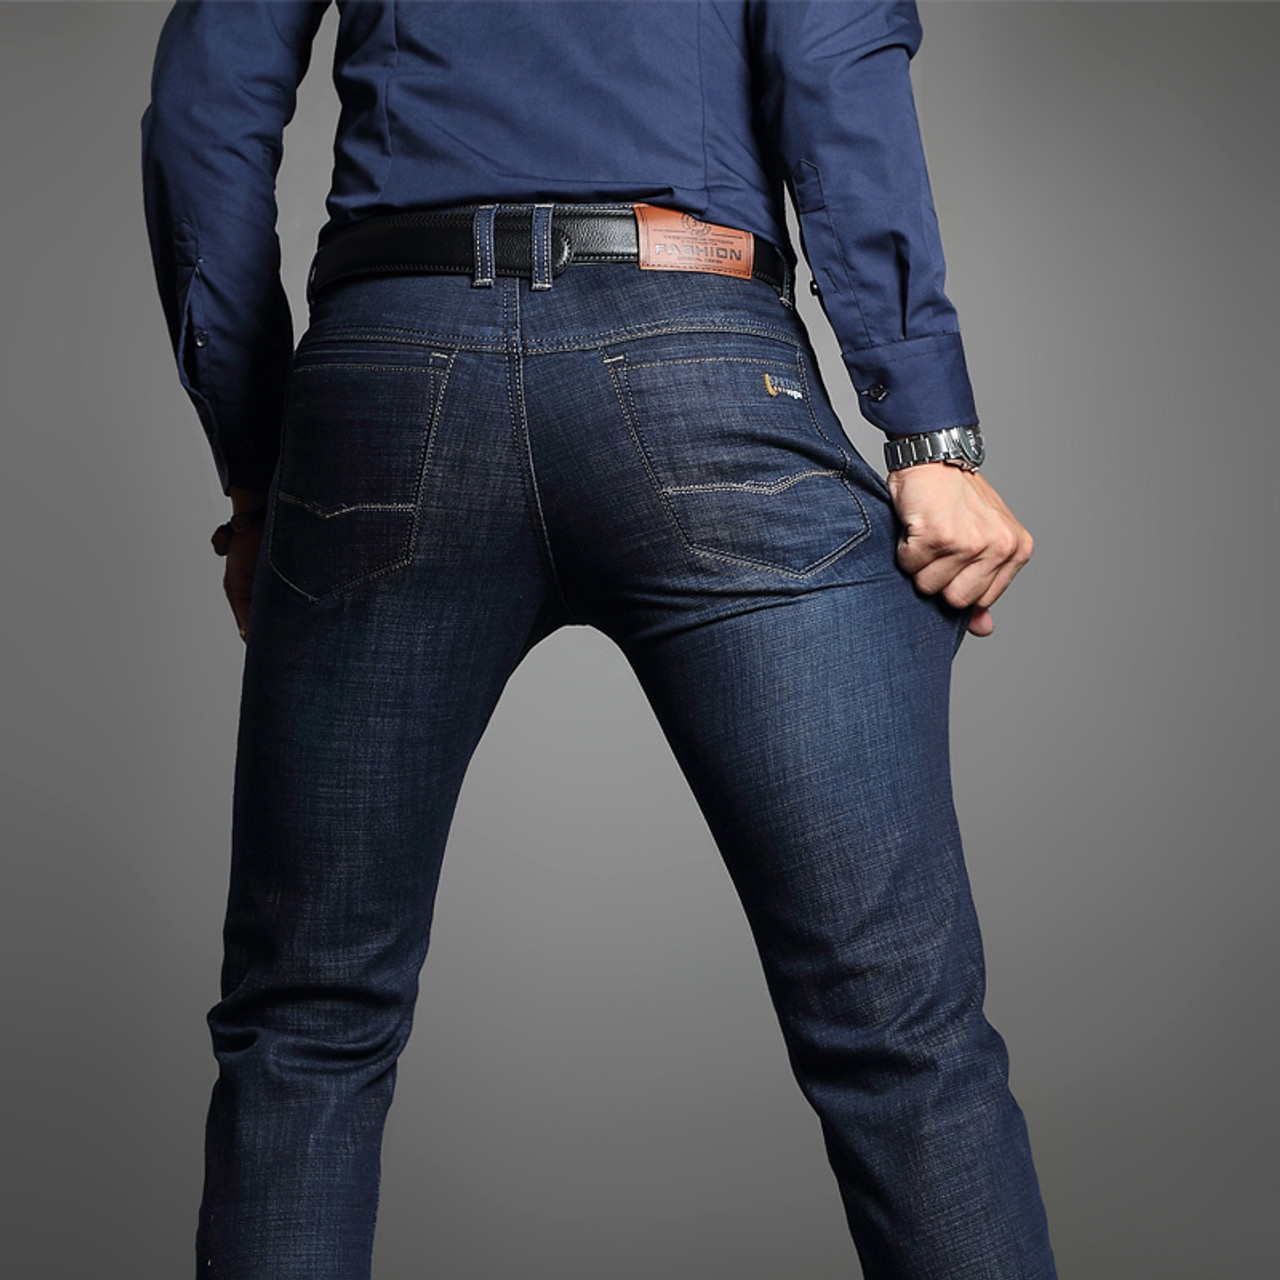 Drizzte Men's Jeans Blue Denim Business Stragiht Silm Fit Jeans Size 30 32 34 35 36 38 Jean for Men - OnshopDeals.Com